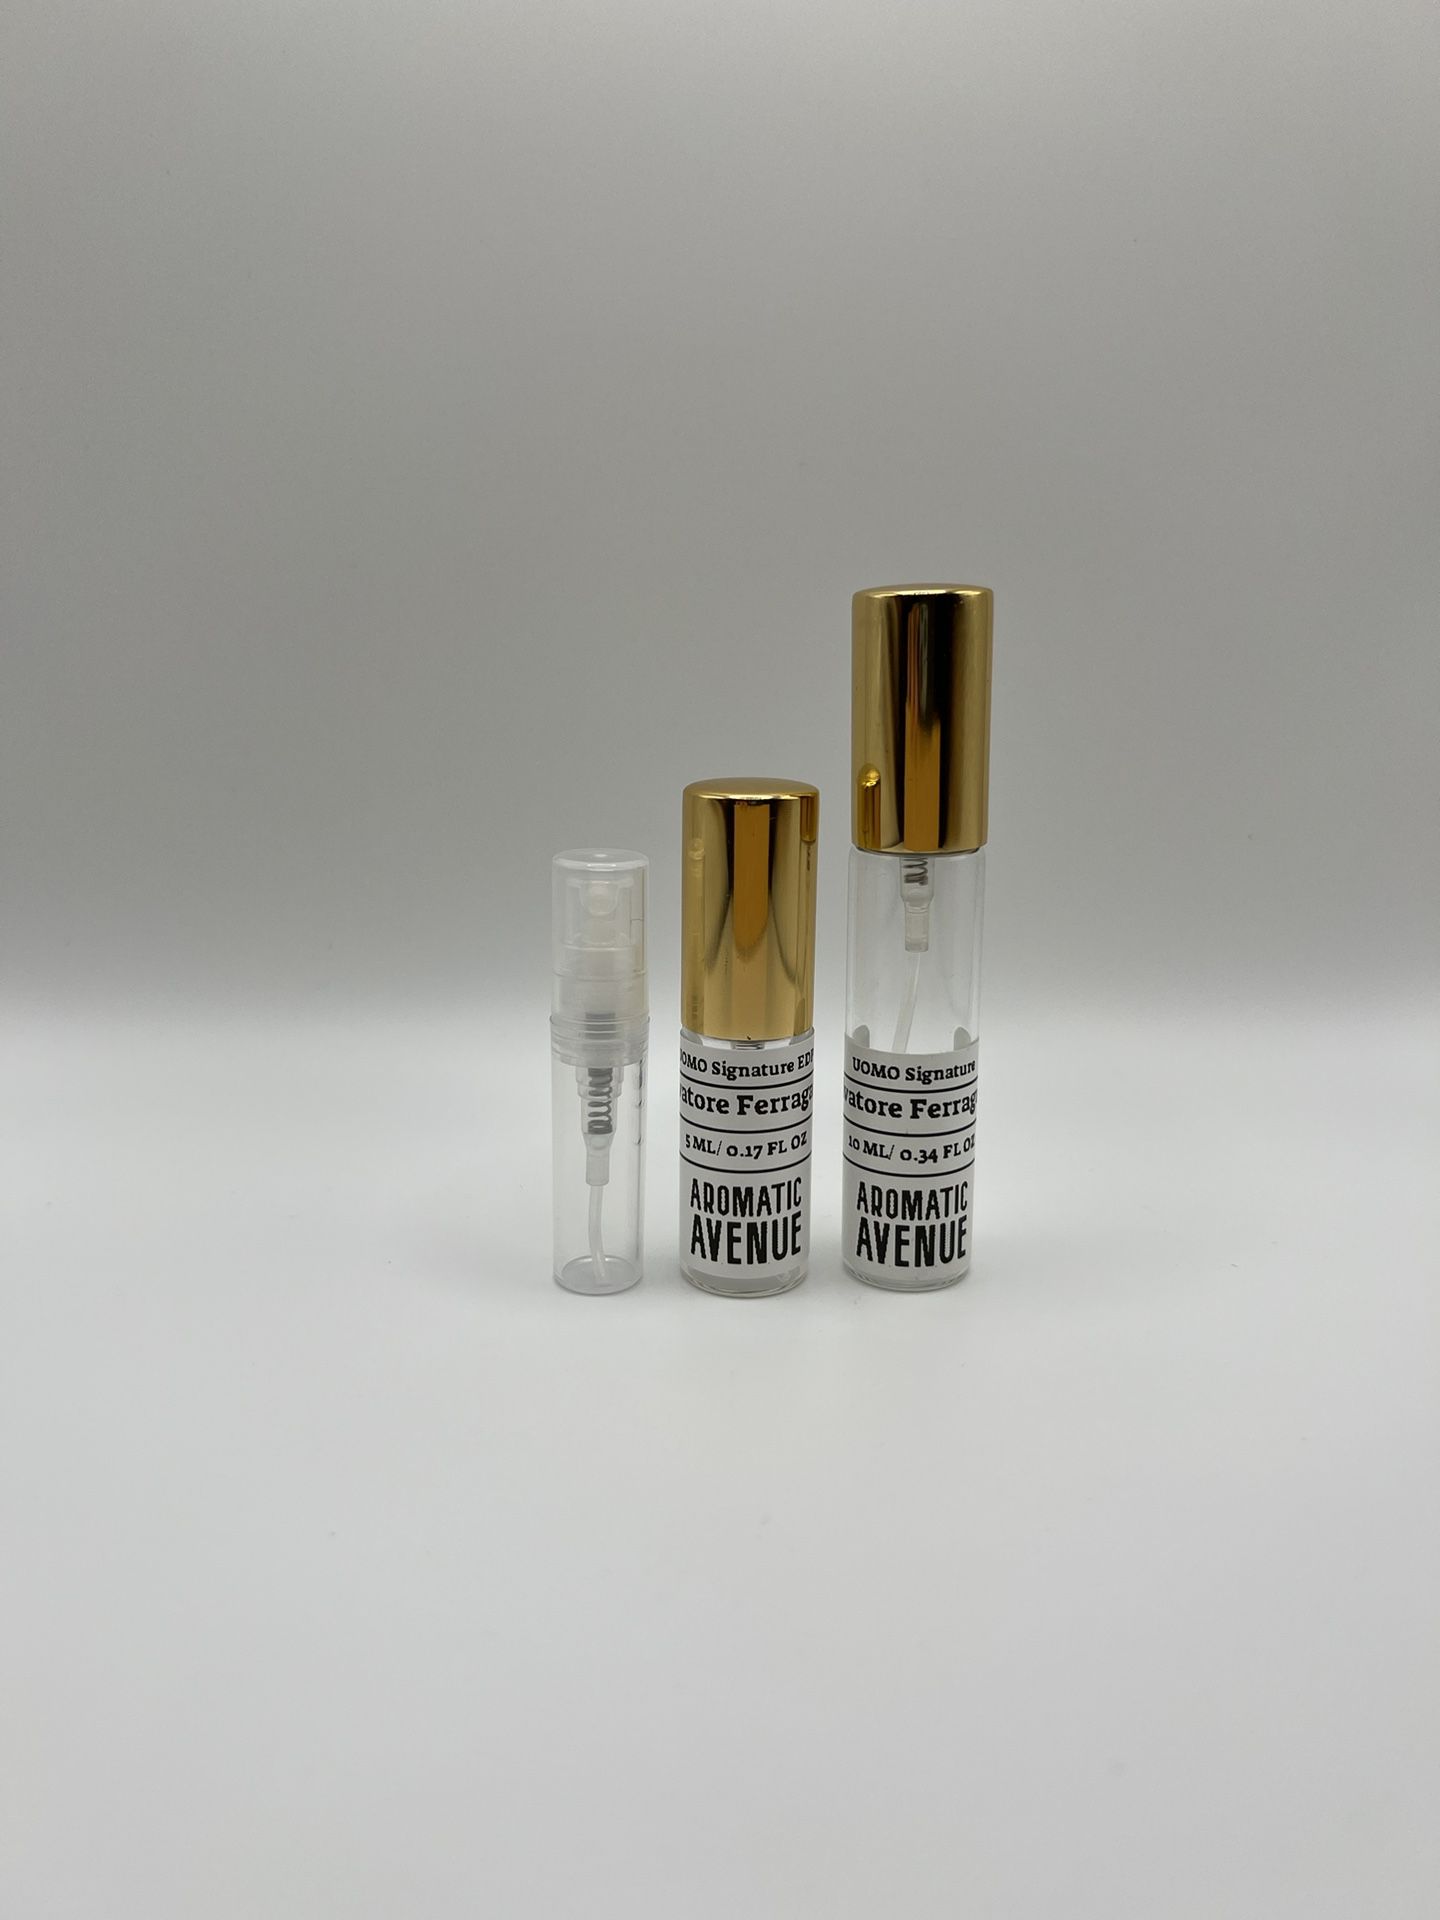 Ferragamo UOMO Signature EDP Fragrance Glass Decant Sample Spray Travel Size Vial 10ML